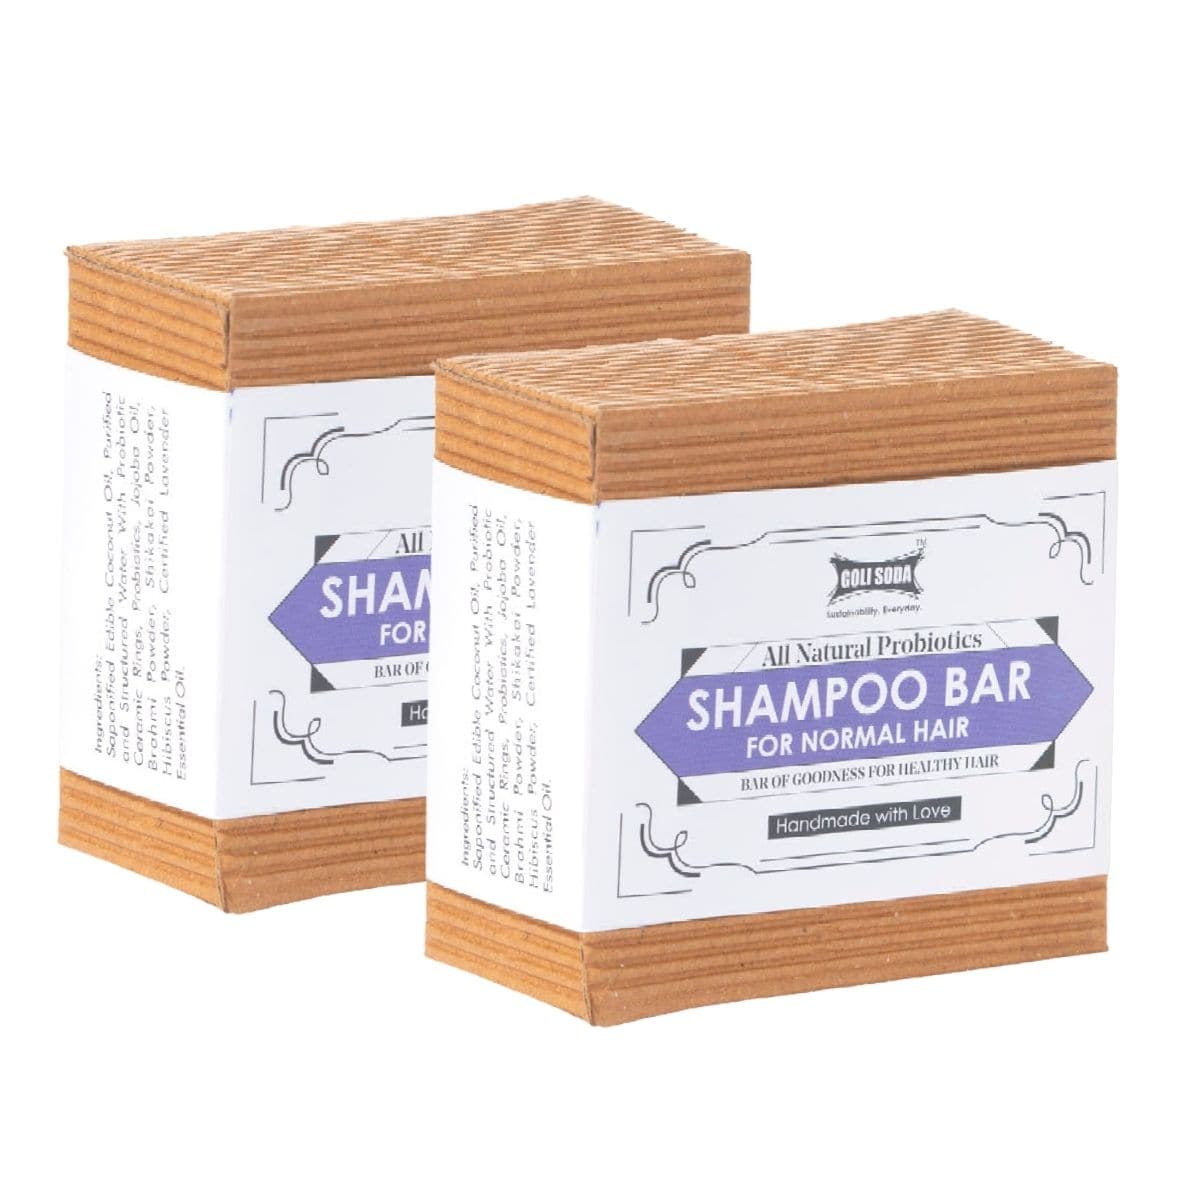 Goli Soda All Natural Probiotics Shampoo Bar for Normal Hair - 90 g